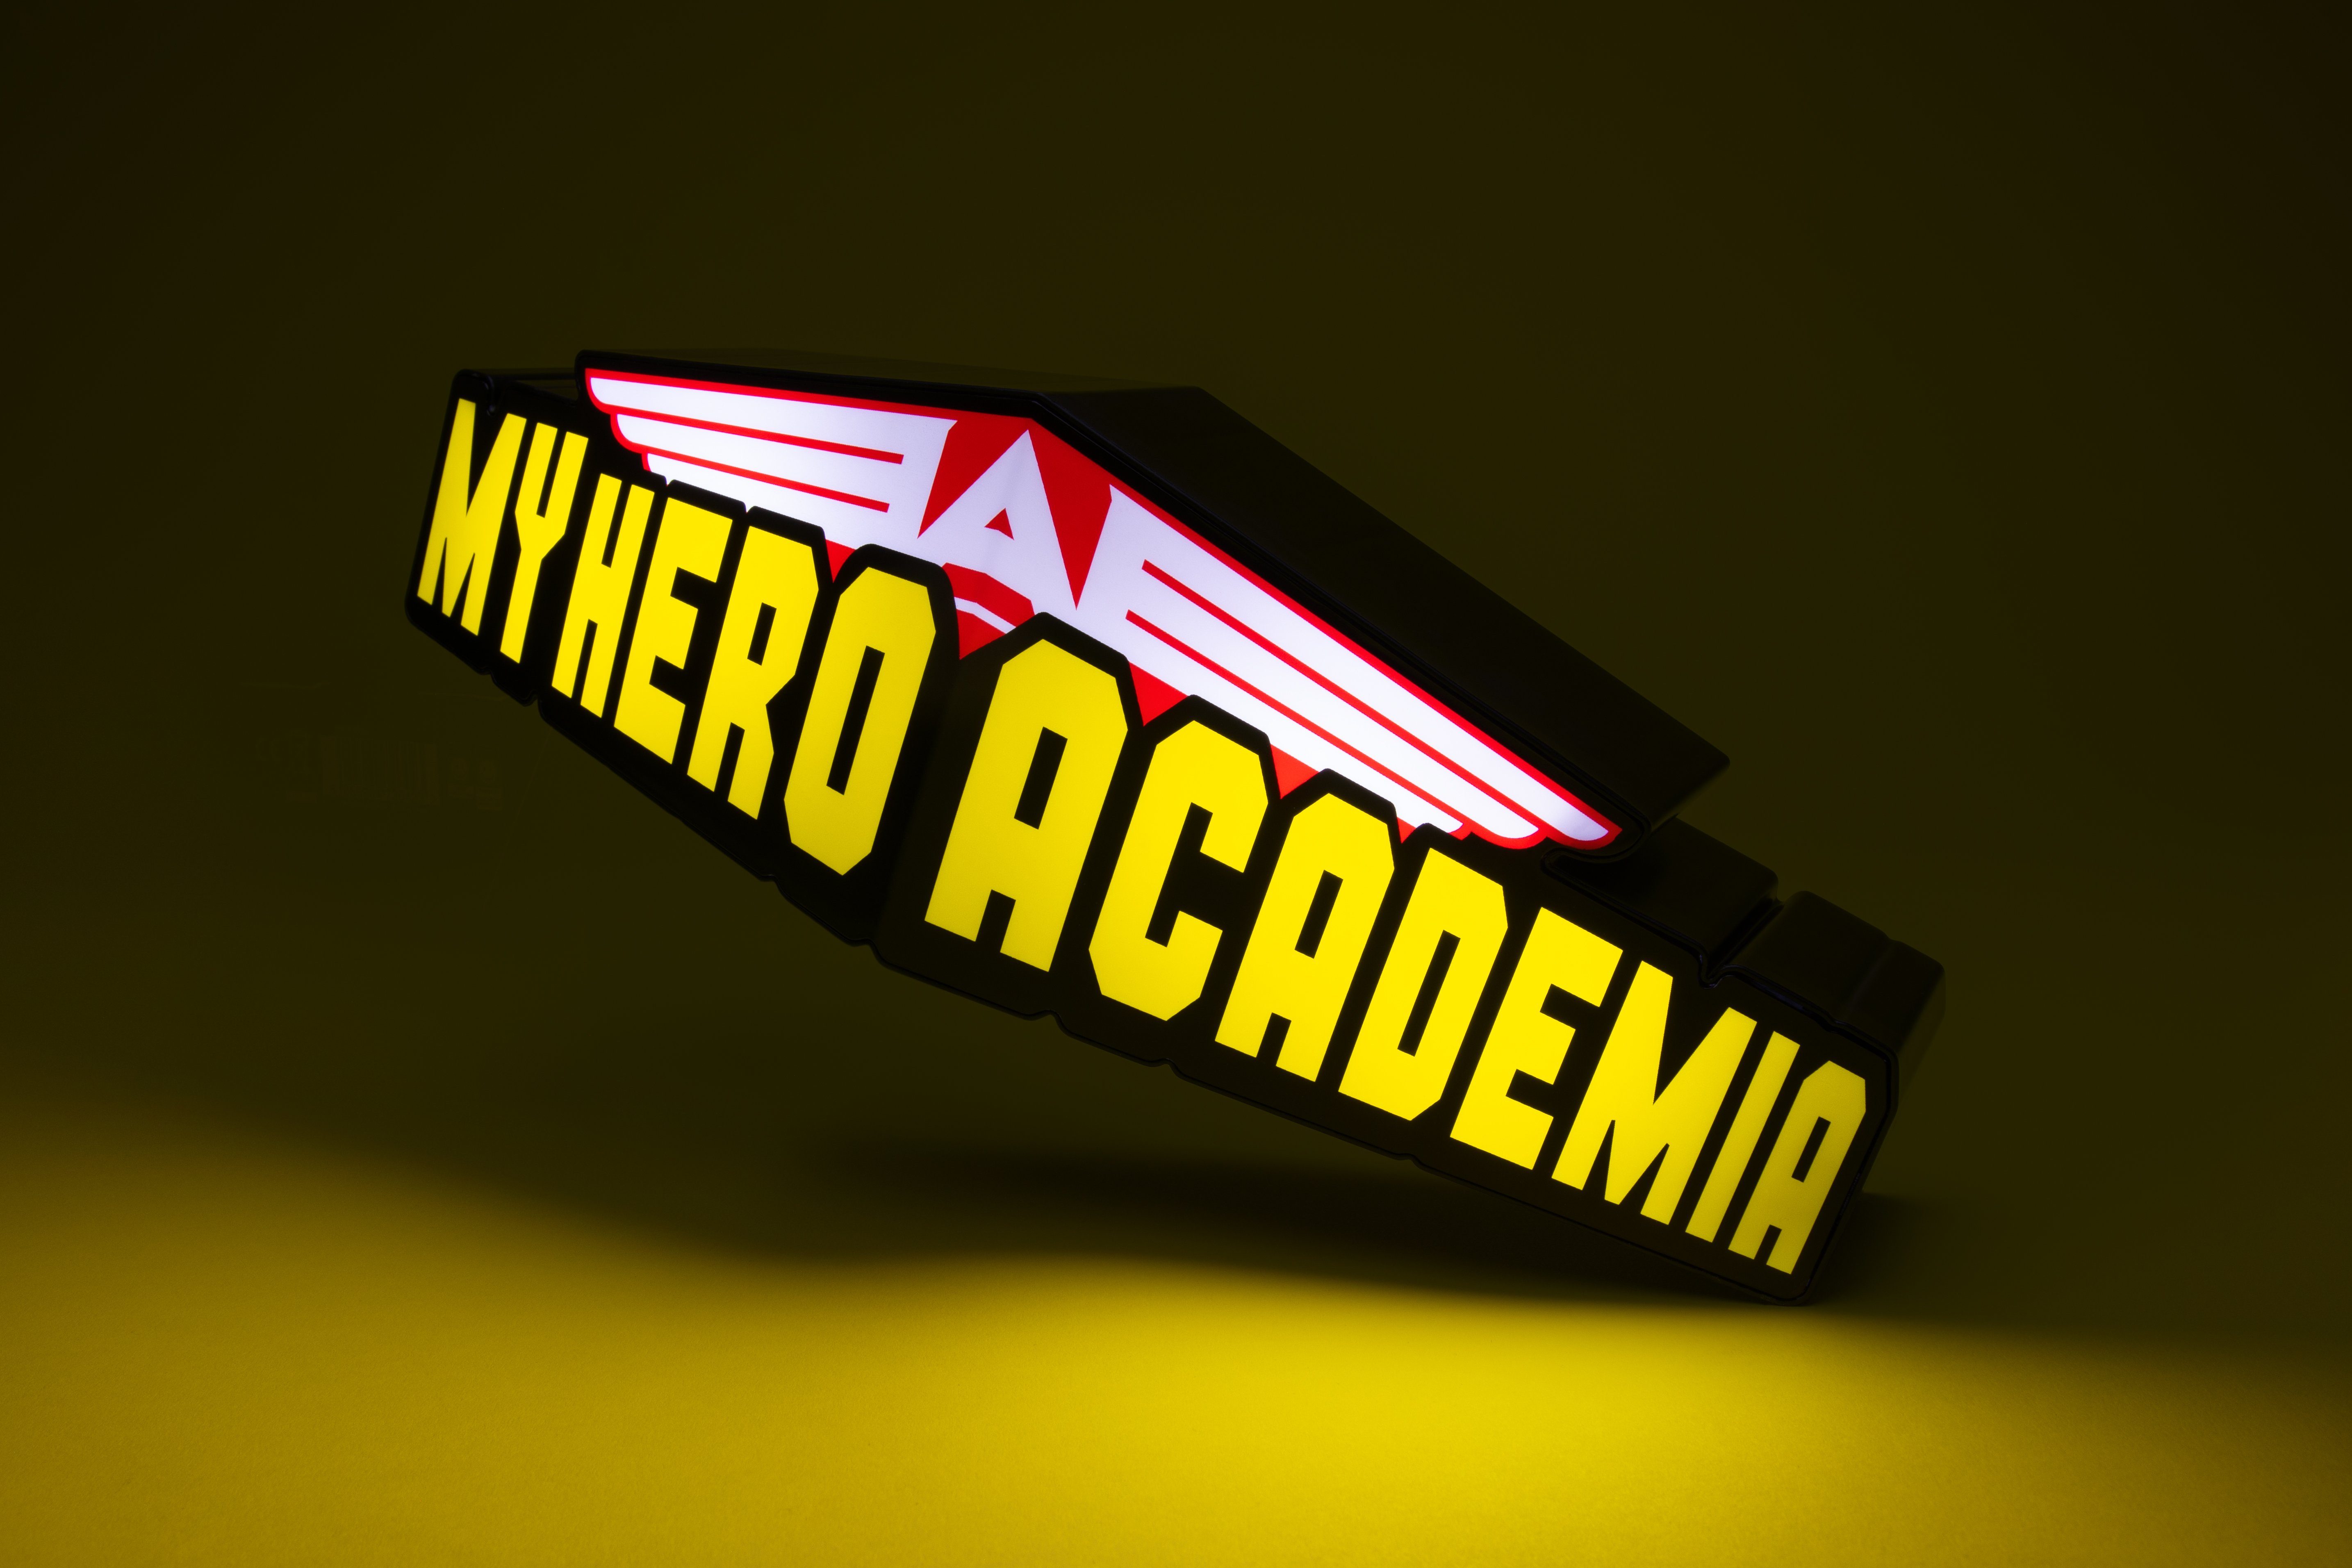 Hero Paladone Academia Leuchte Logo LED Dekolicht My